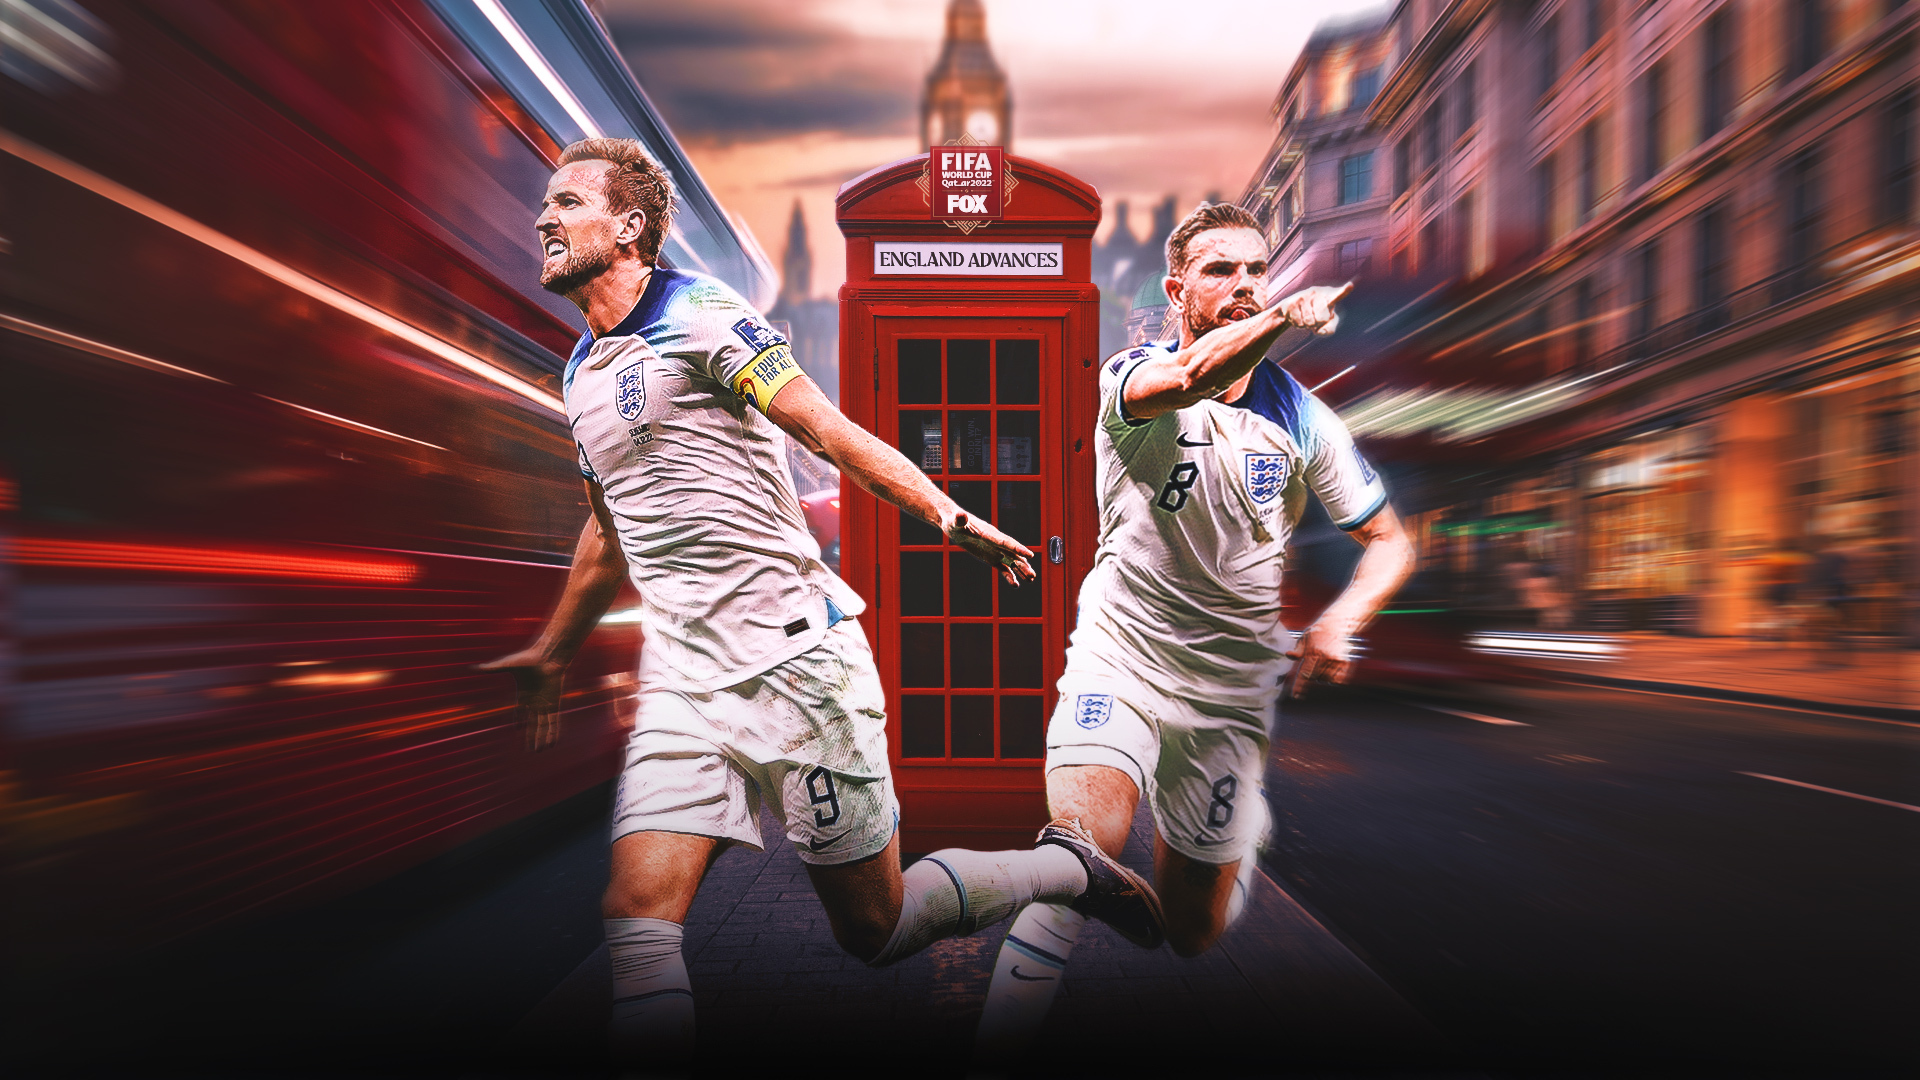 world cup 2022 wallpaper england